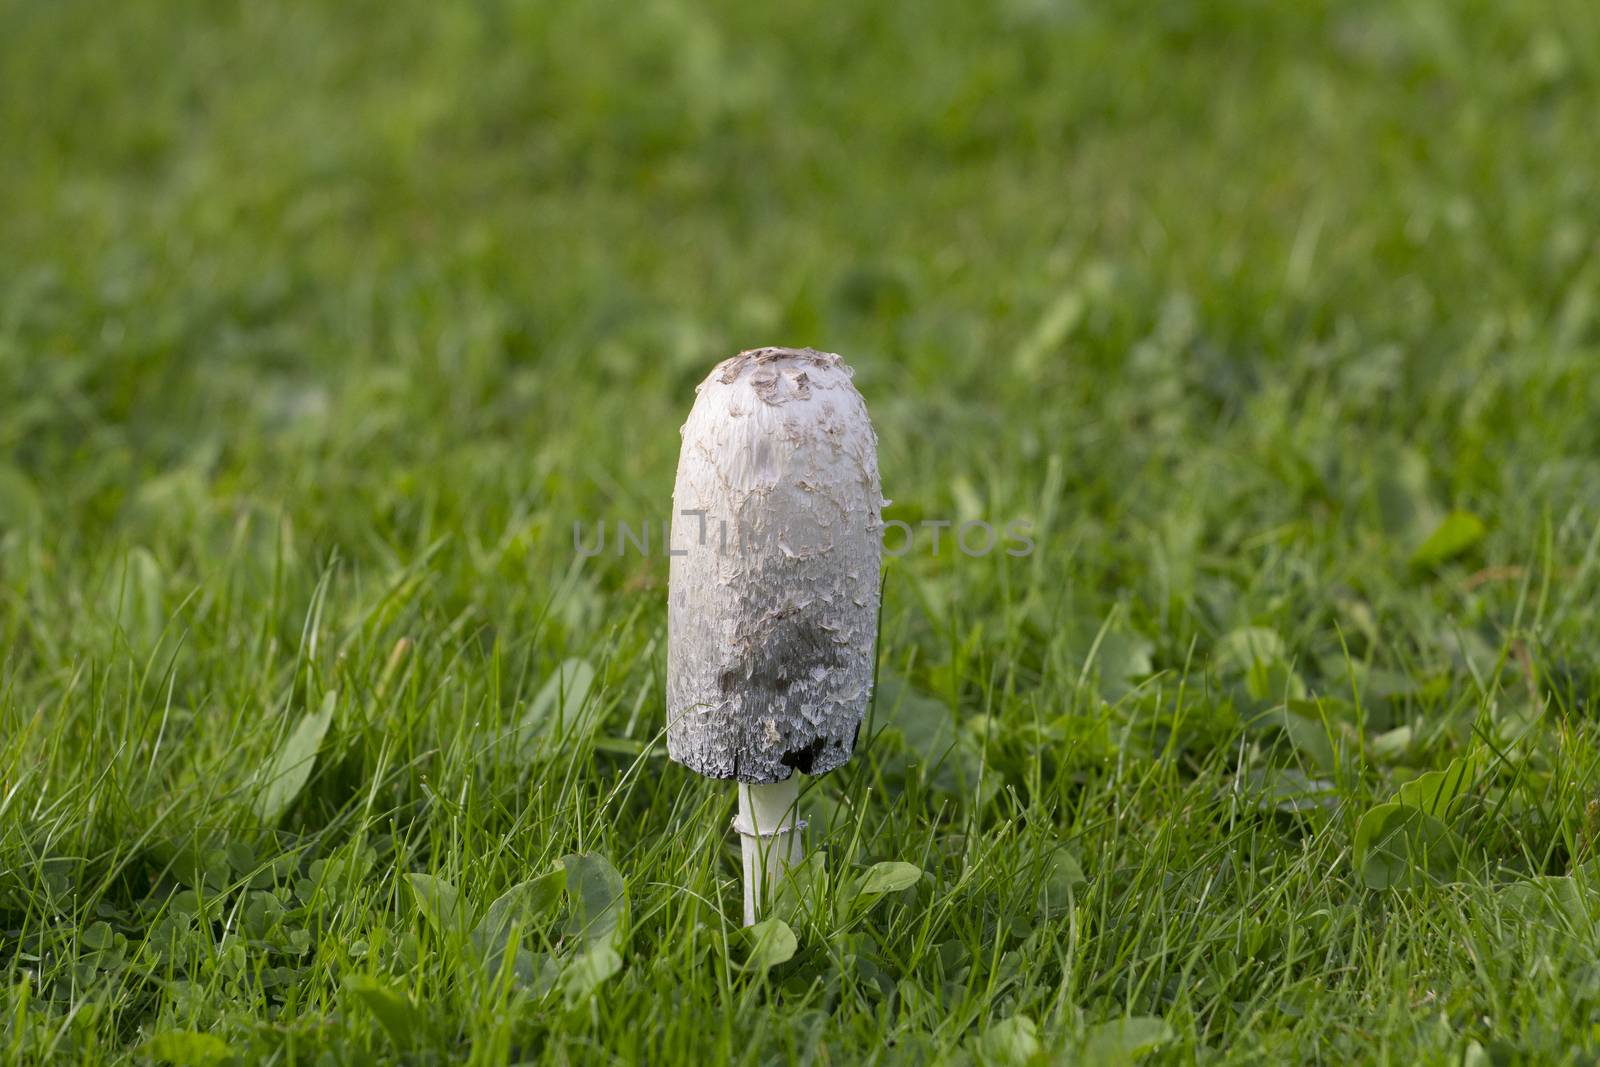 Shaggy Ink Cap (or Coprinus comatus fungi) edible mushroom